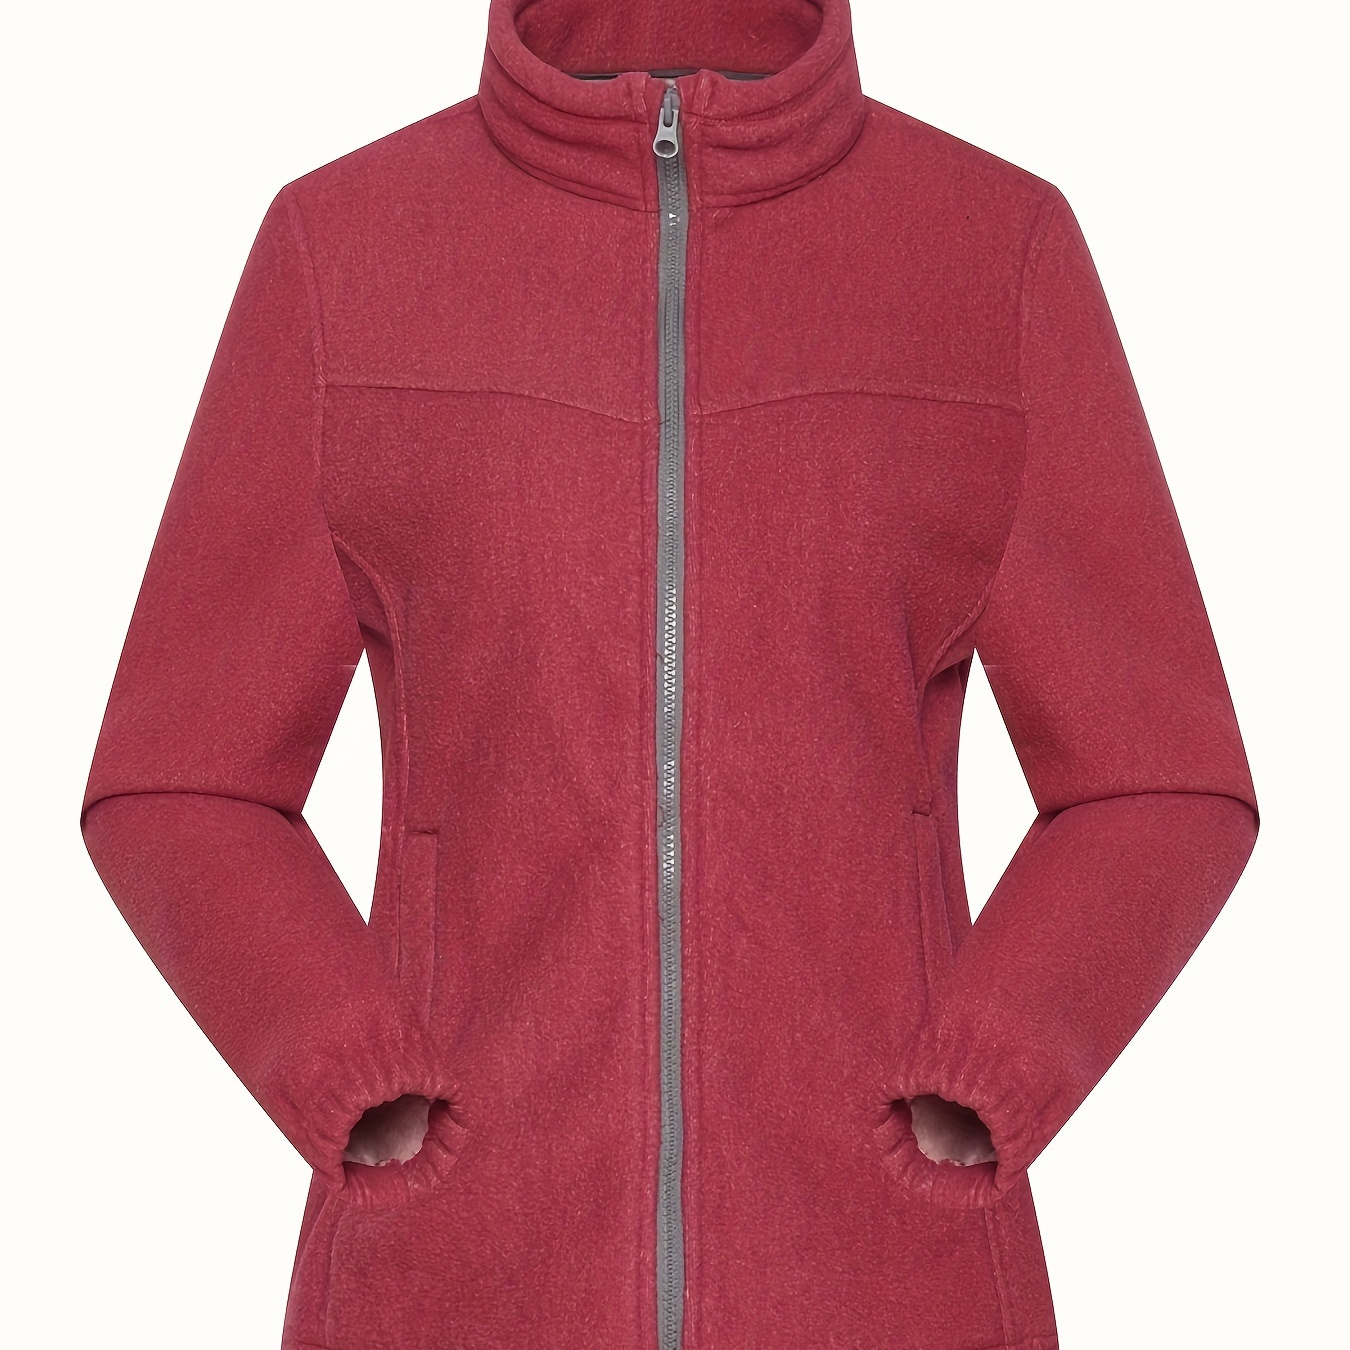 

Women's Solid Color Full-zipper Front Sports Jacket, Windproof Fleece Soft Comfortable Coat With Pocket For Outdoor Running, Women's Activewear